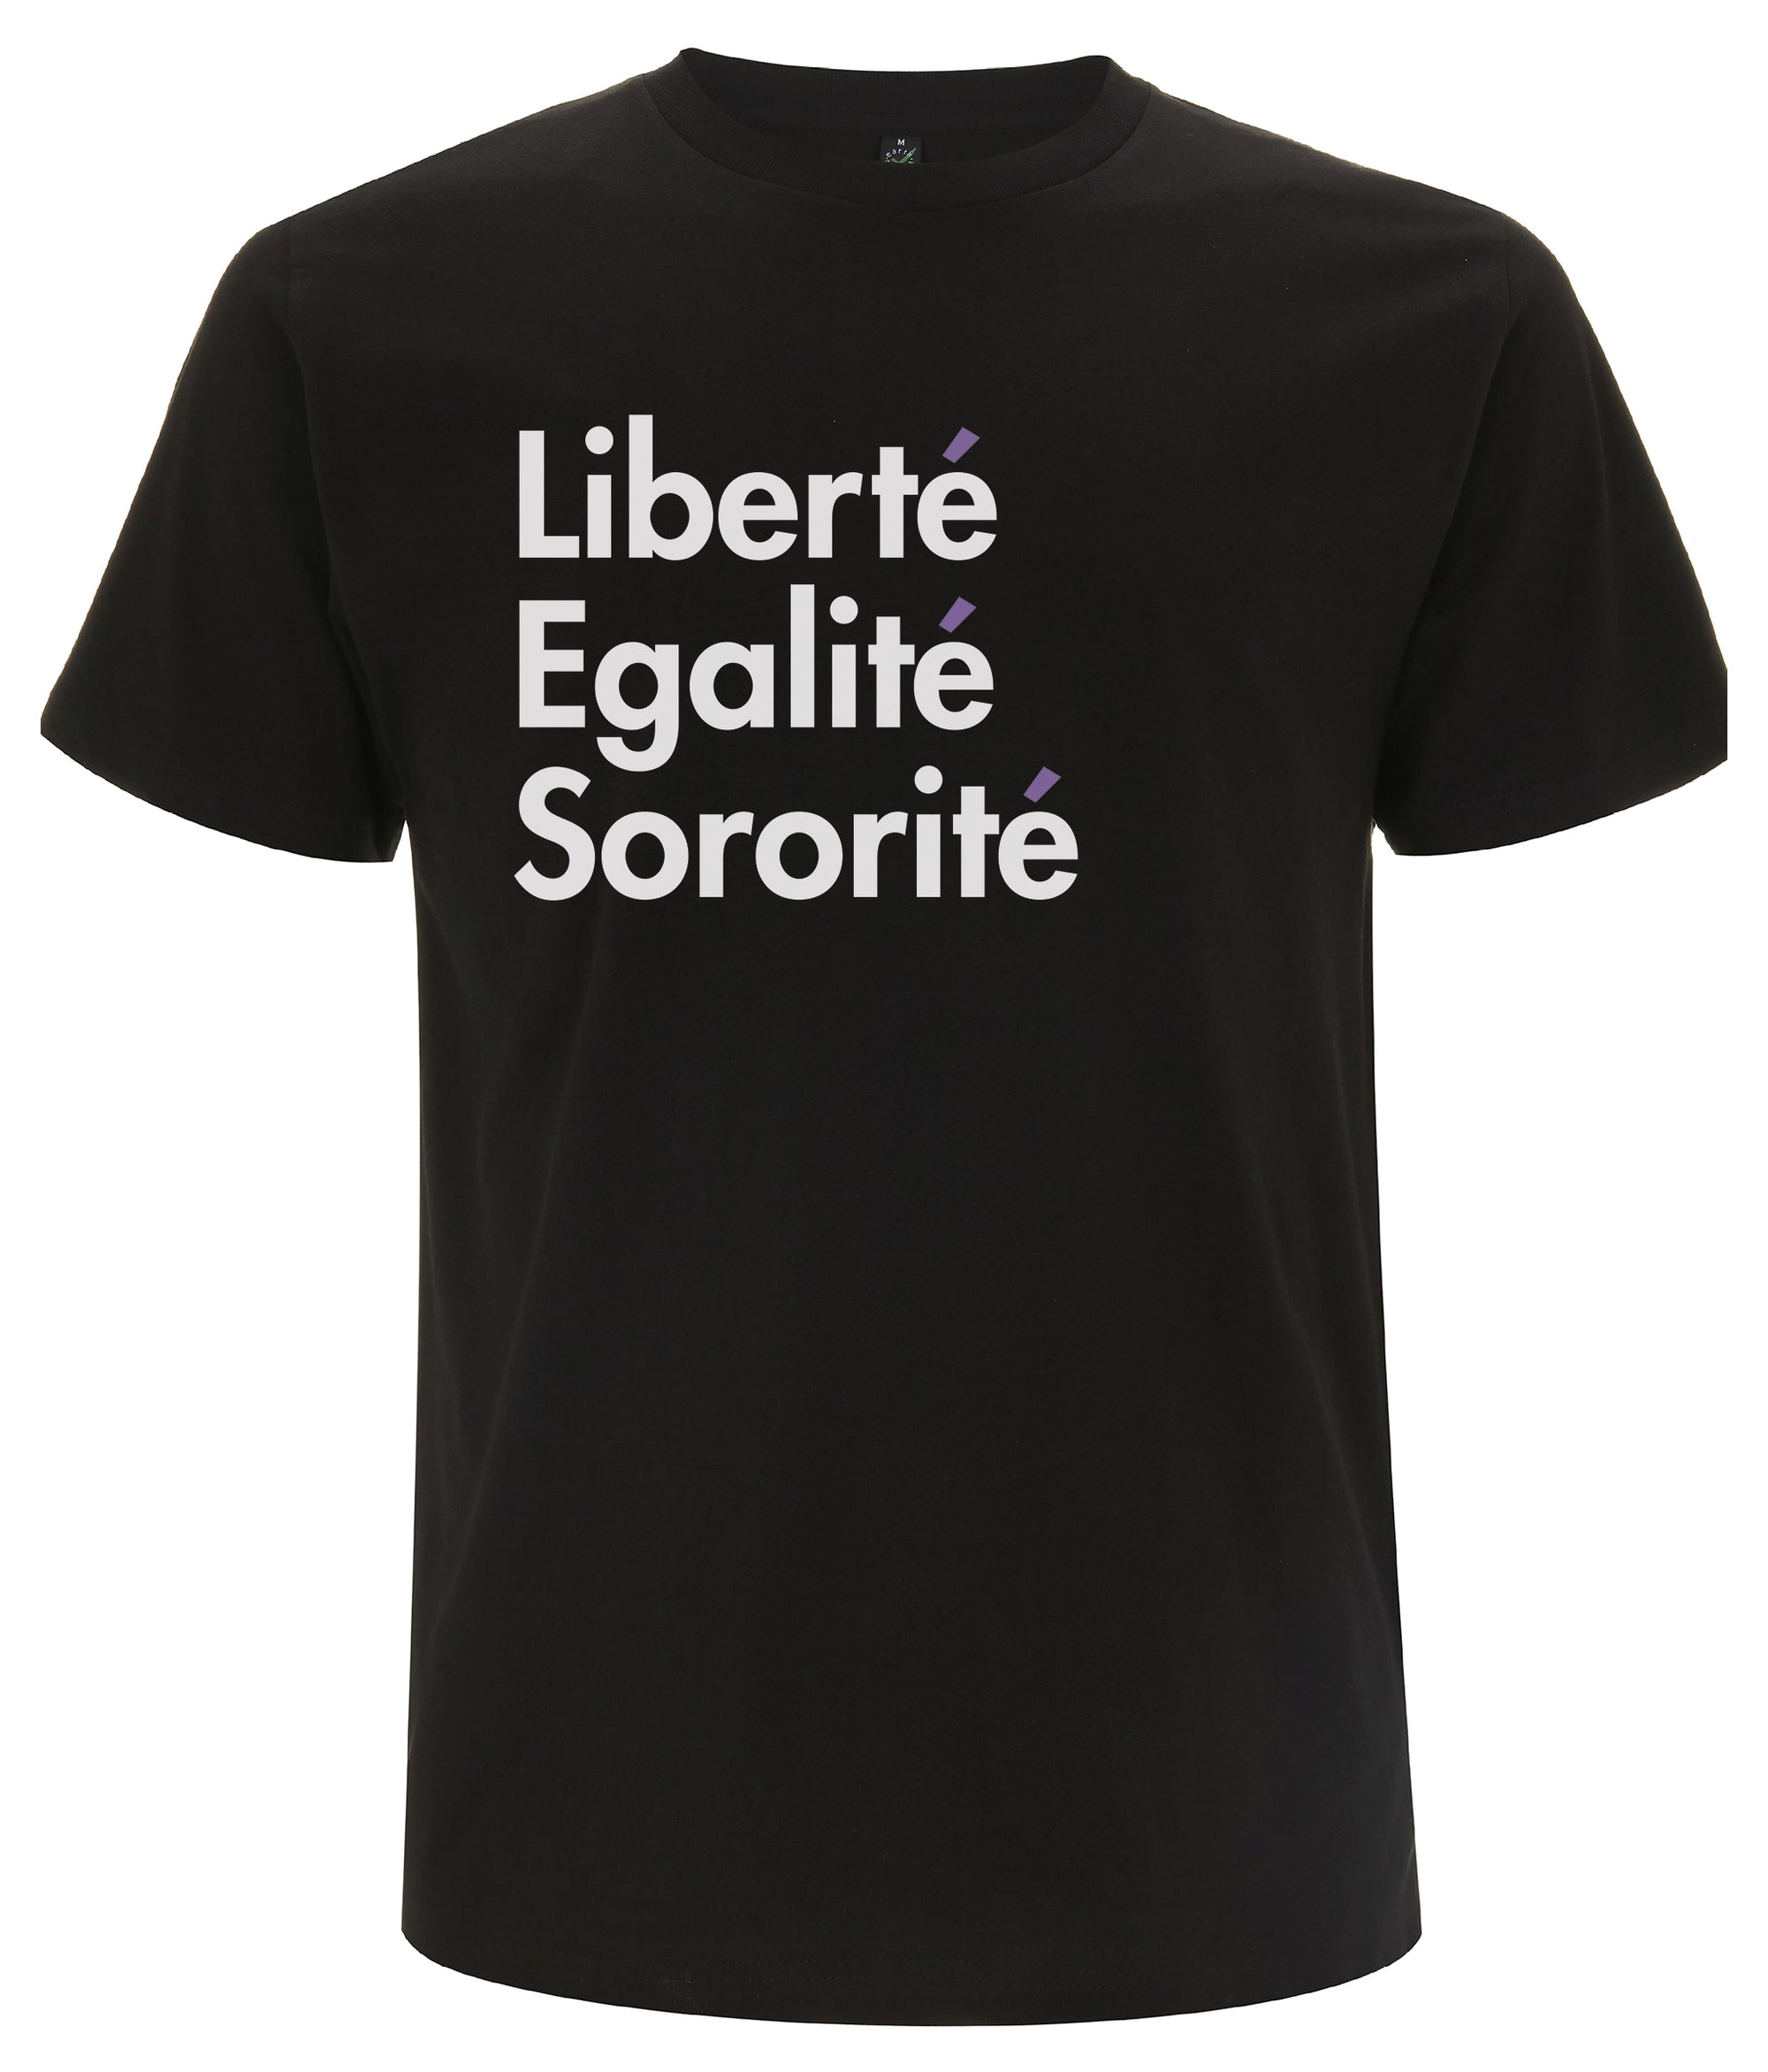 Liberté Egalité Sororité Organic Feminist T Shirt Black